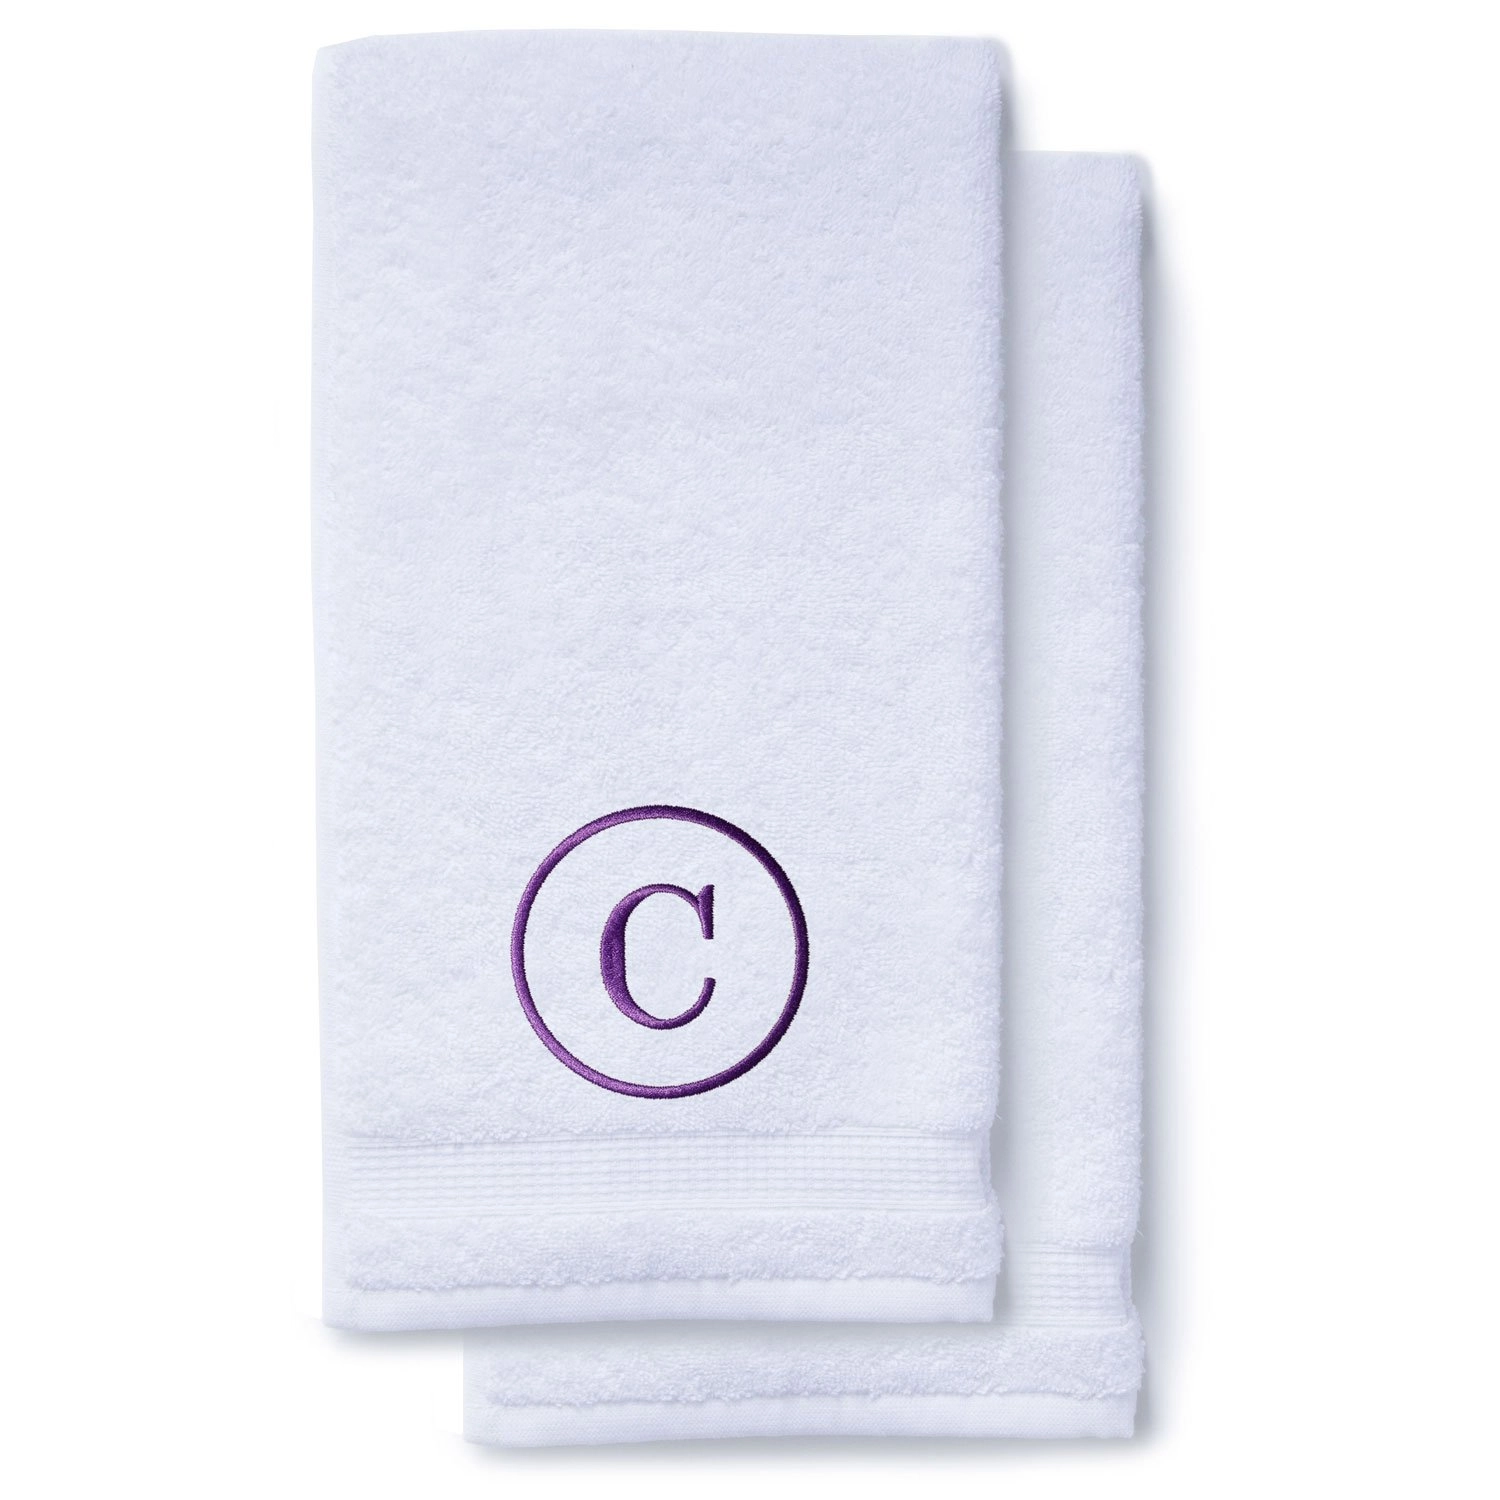 Embroidered Bath Hand Towel, Monogrammed Hand Towel, Beach Bath